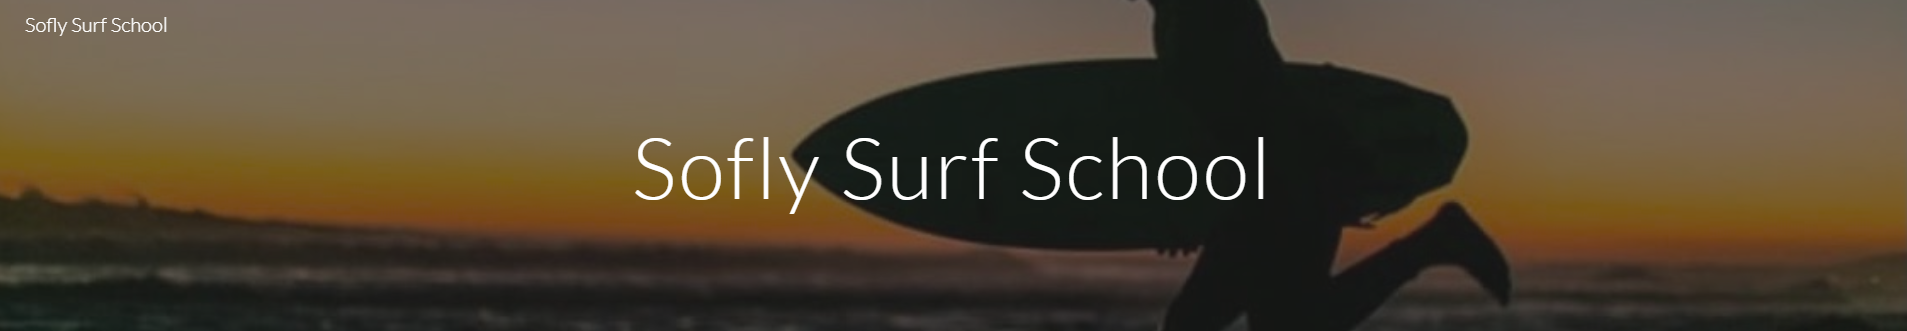 SOFLY SURF SCHOOL